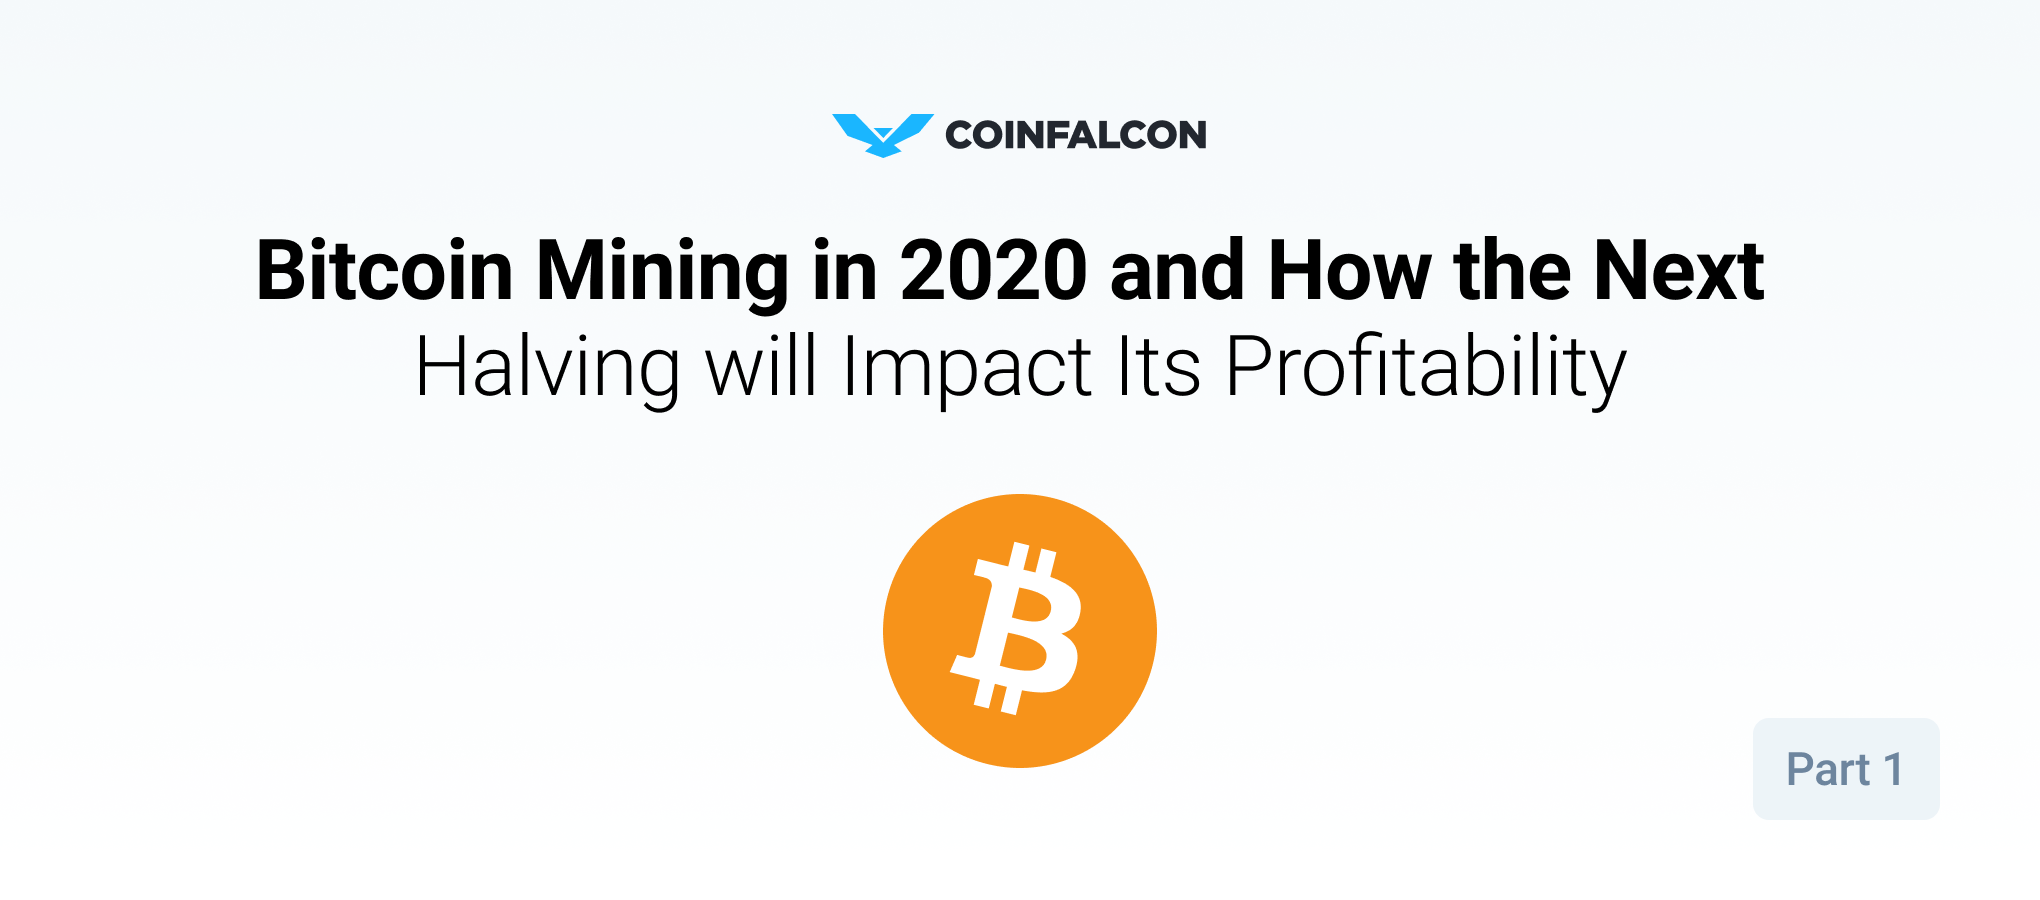 profitability of mining bitcoins cz